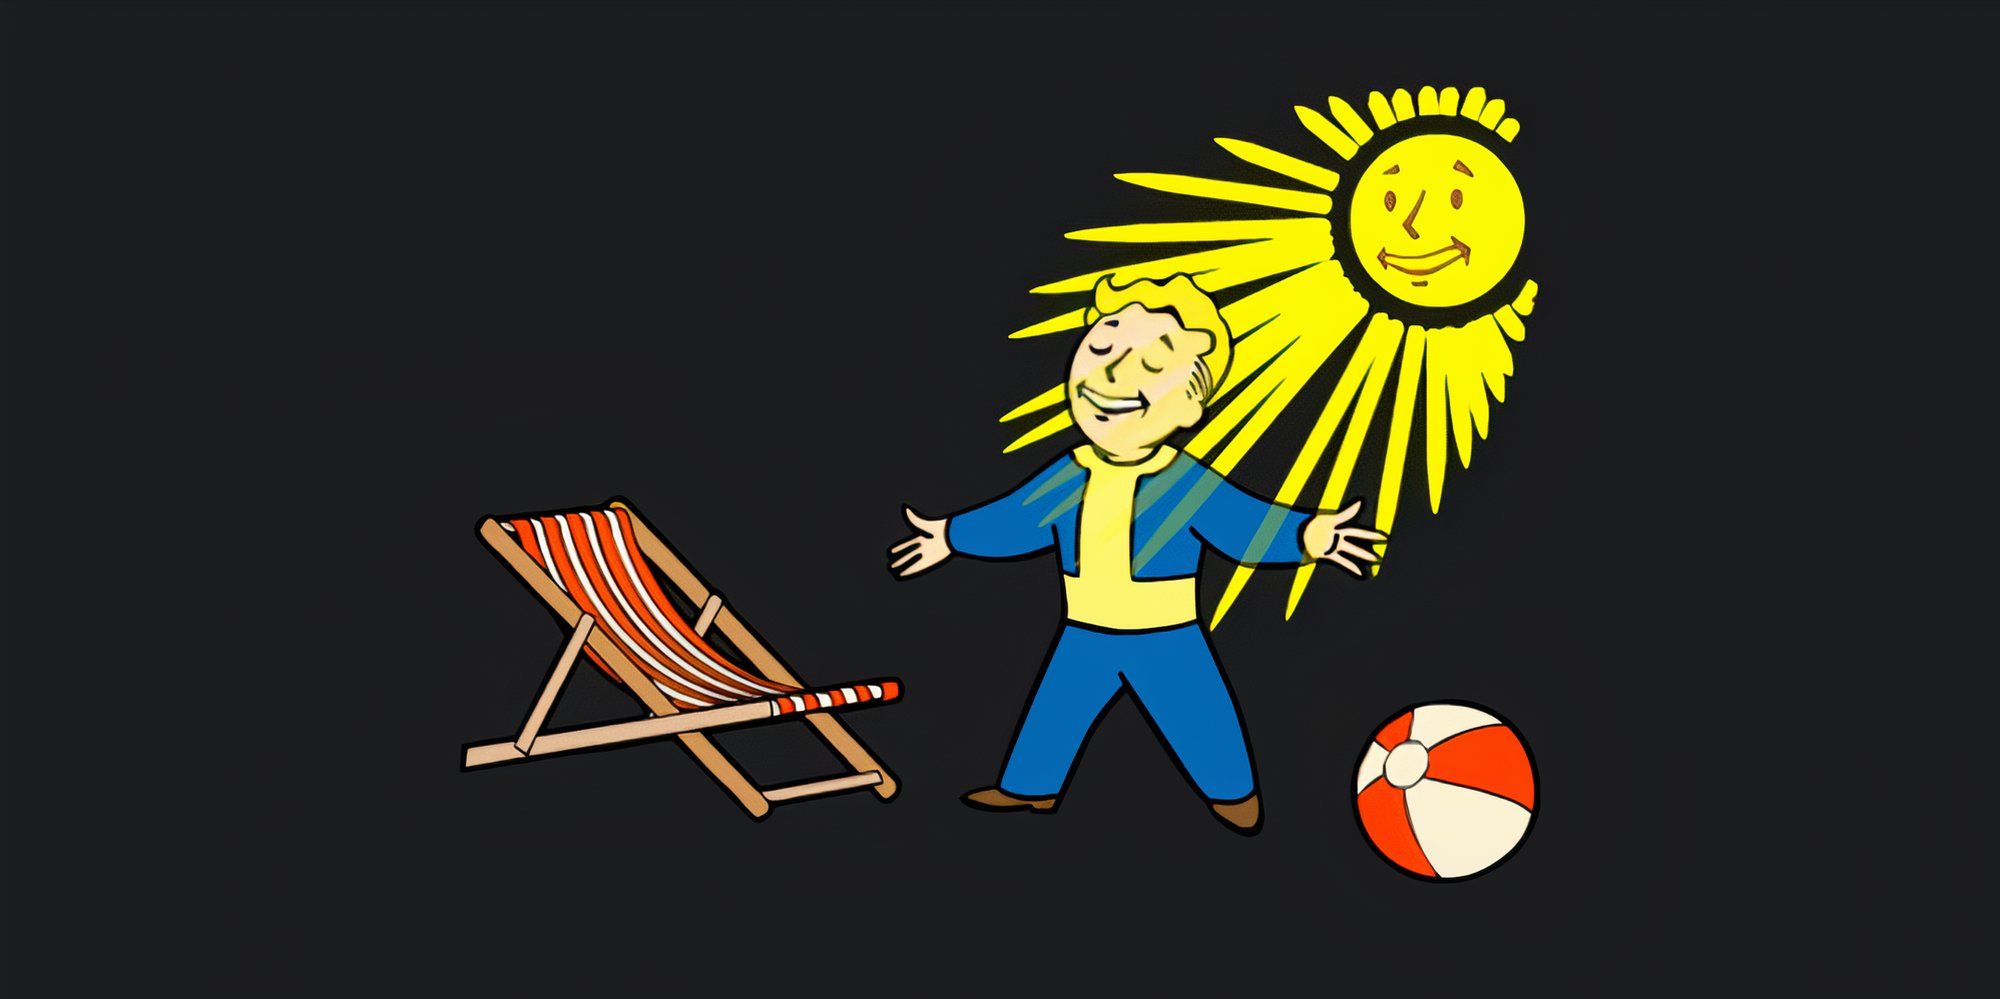 Vault Boy basks in a sun that smiles down on him next to a beach chair